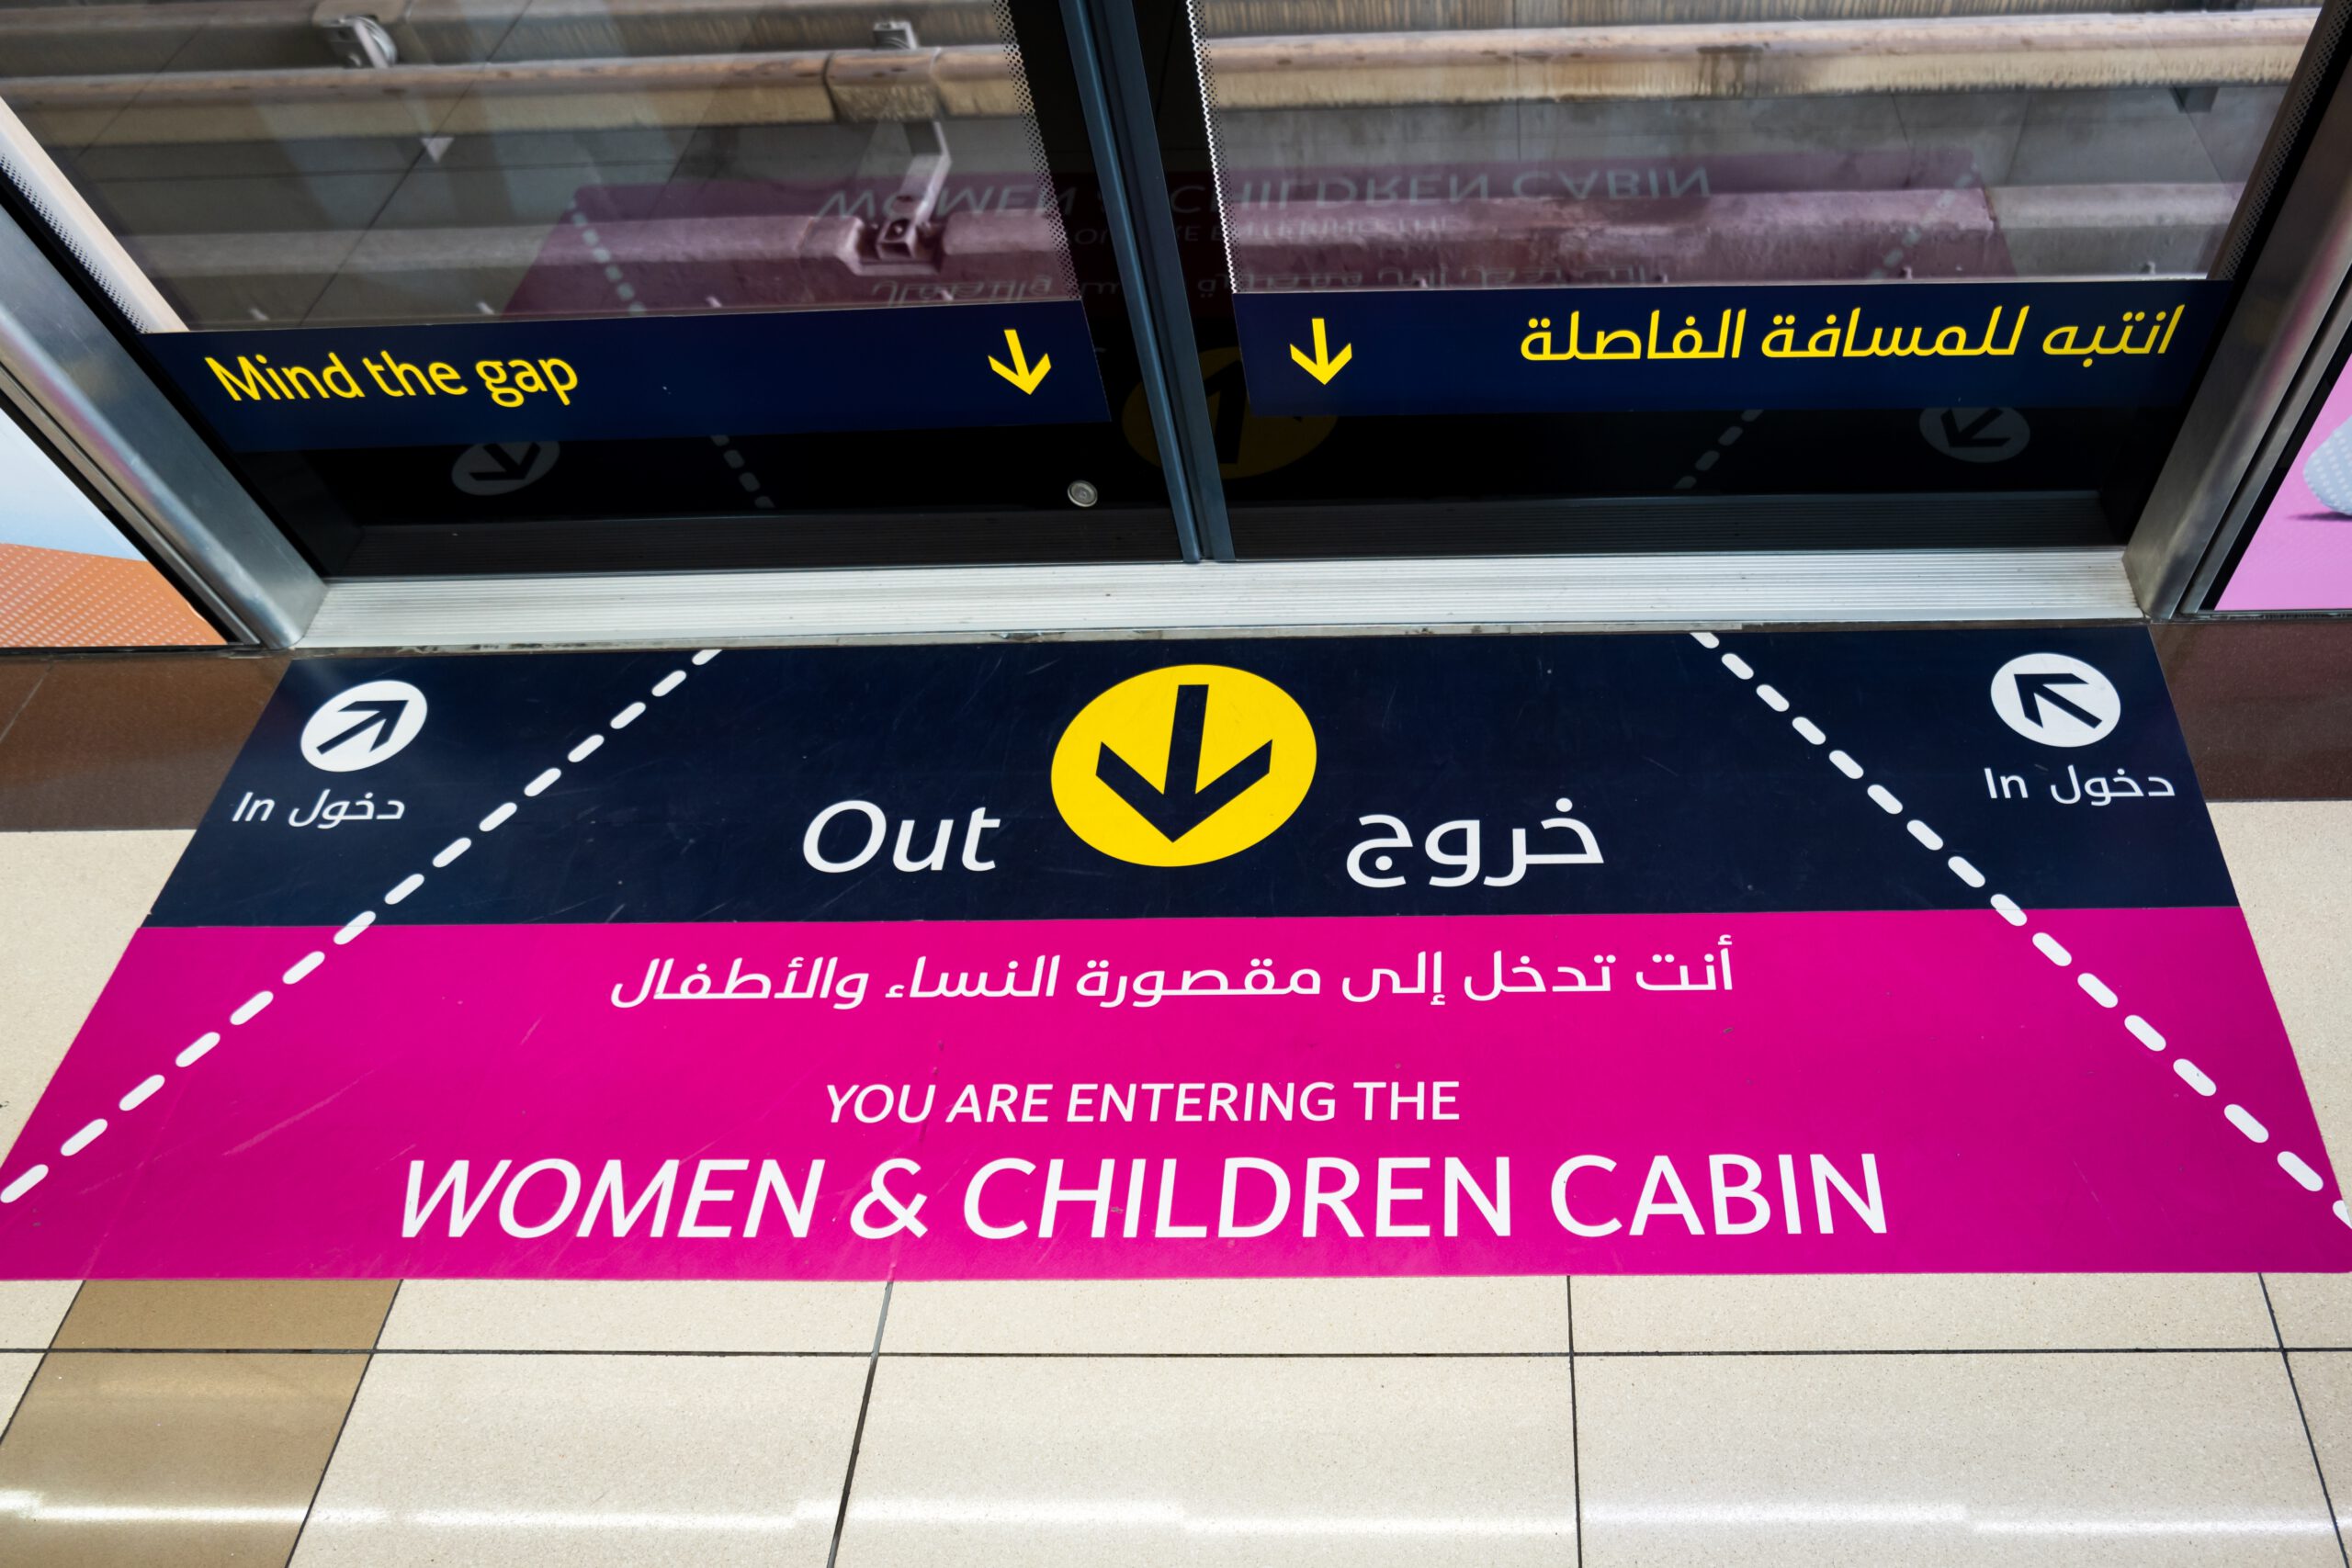 Dubai Metro - Entrance to the cabin for women and children